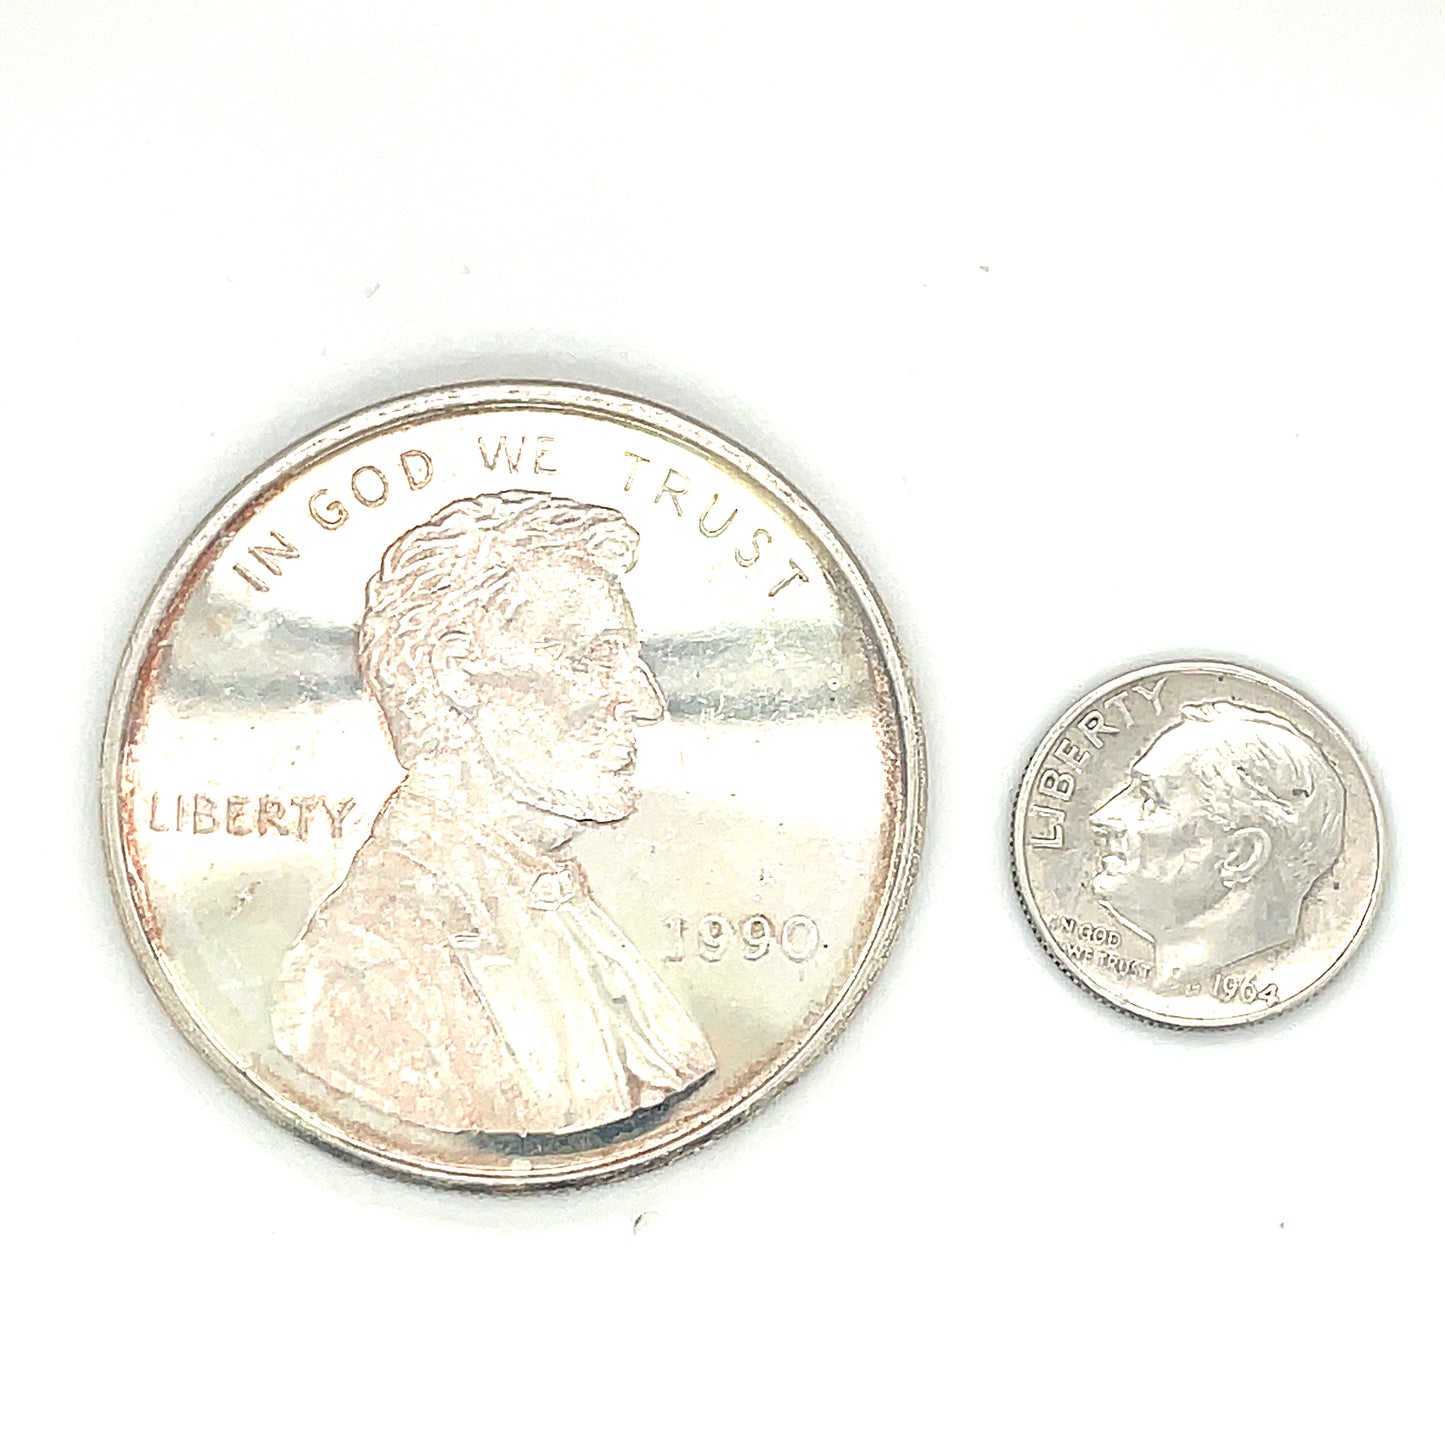 One Troy Ounce Silver 999 Fine 1990 Penny